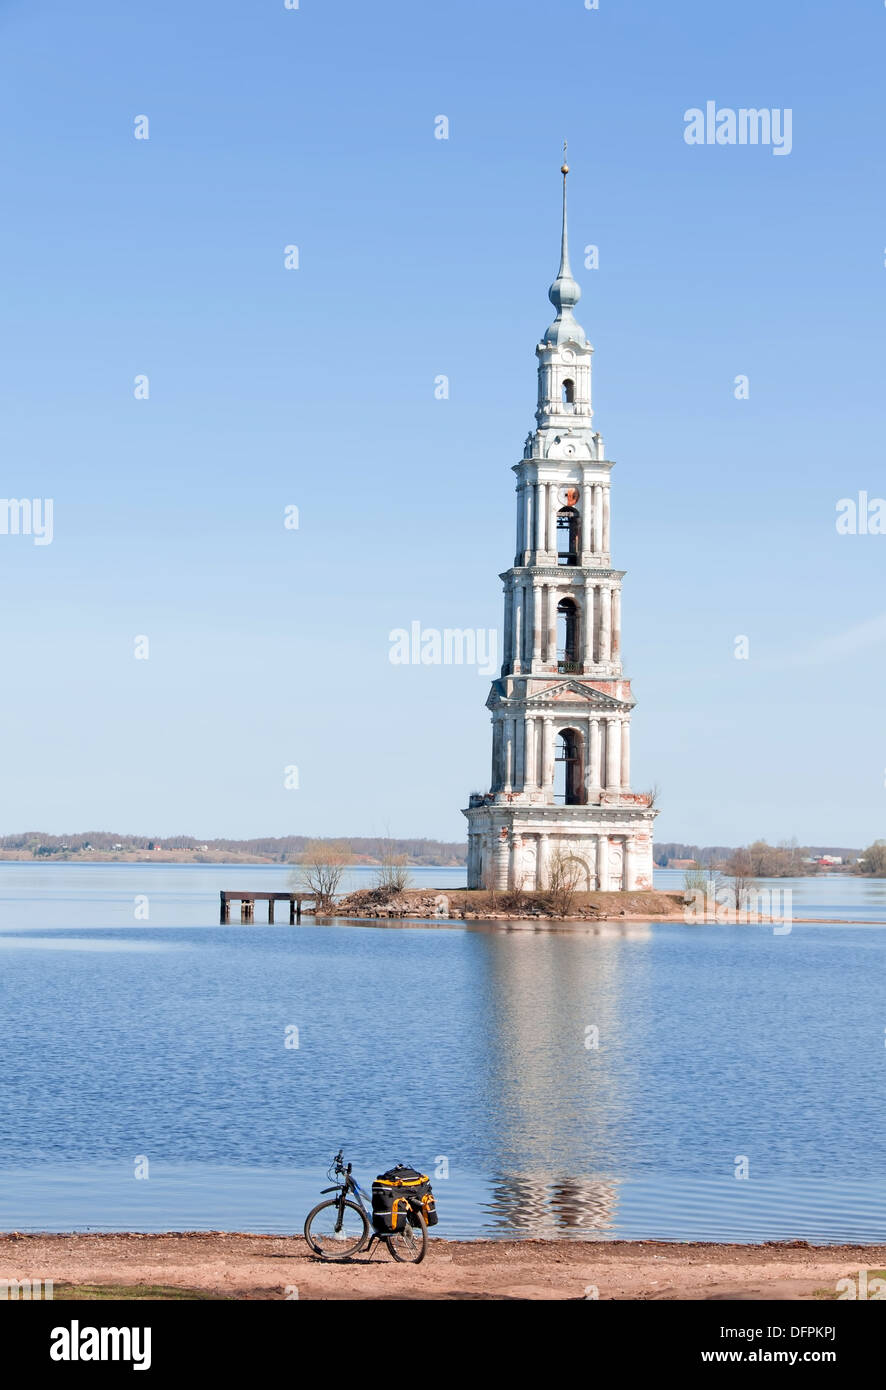 The flooded belltower on river Volga, Kalyazin, Russia Stock Photo